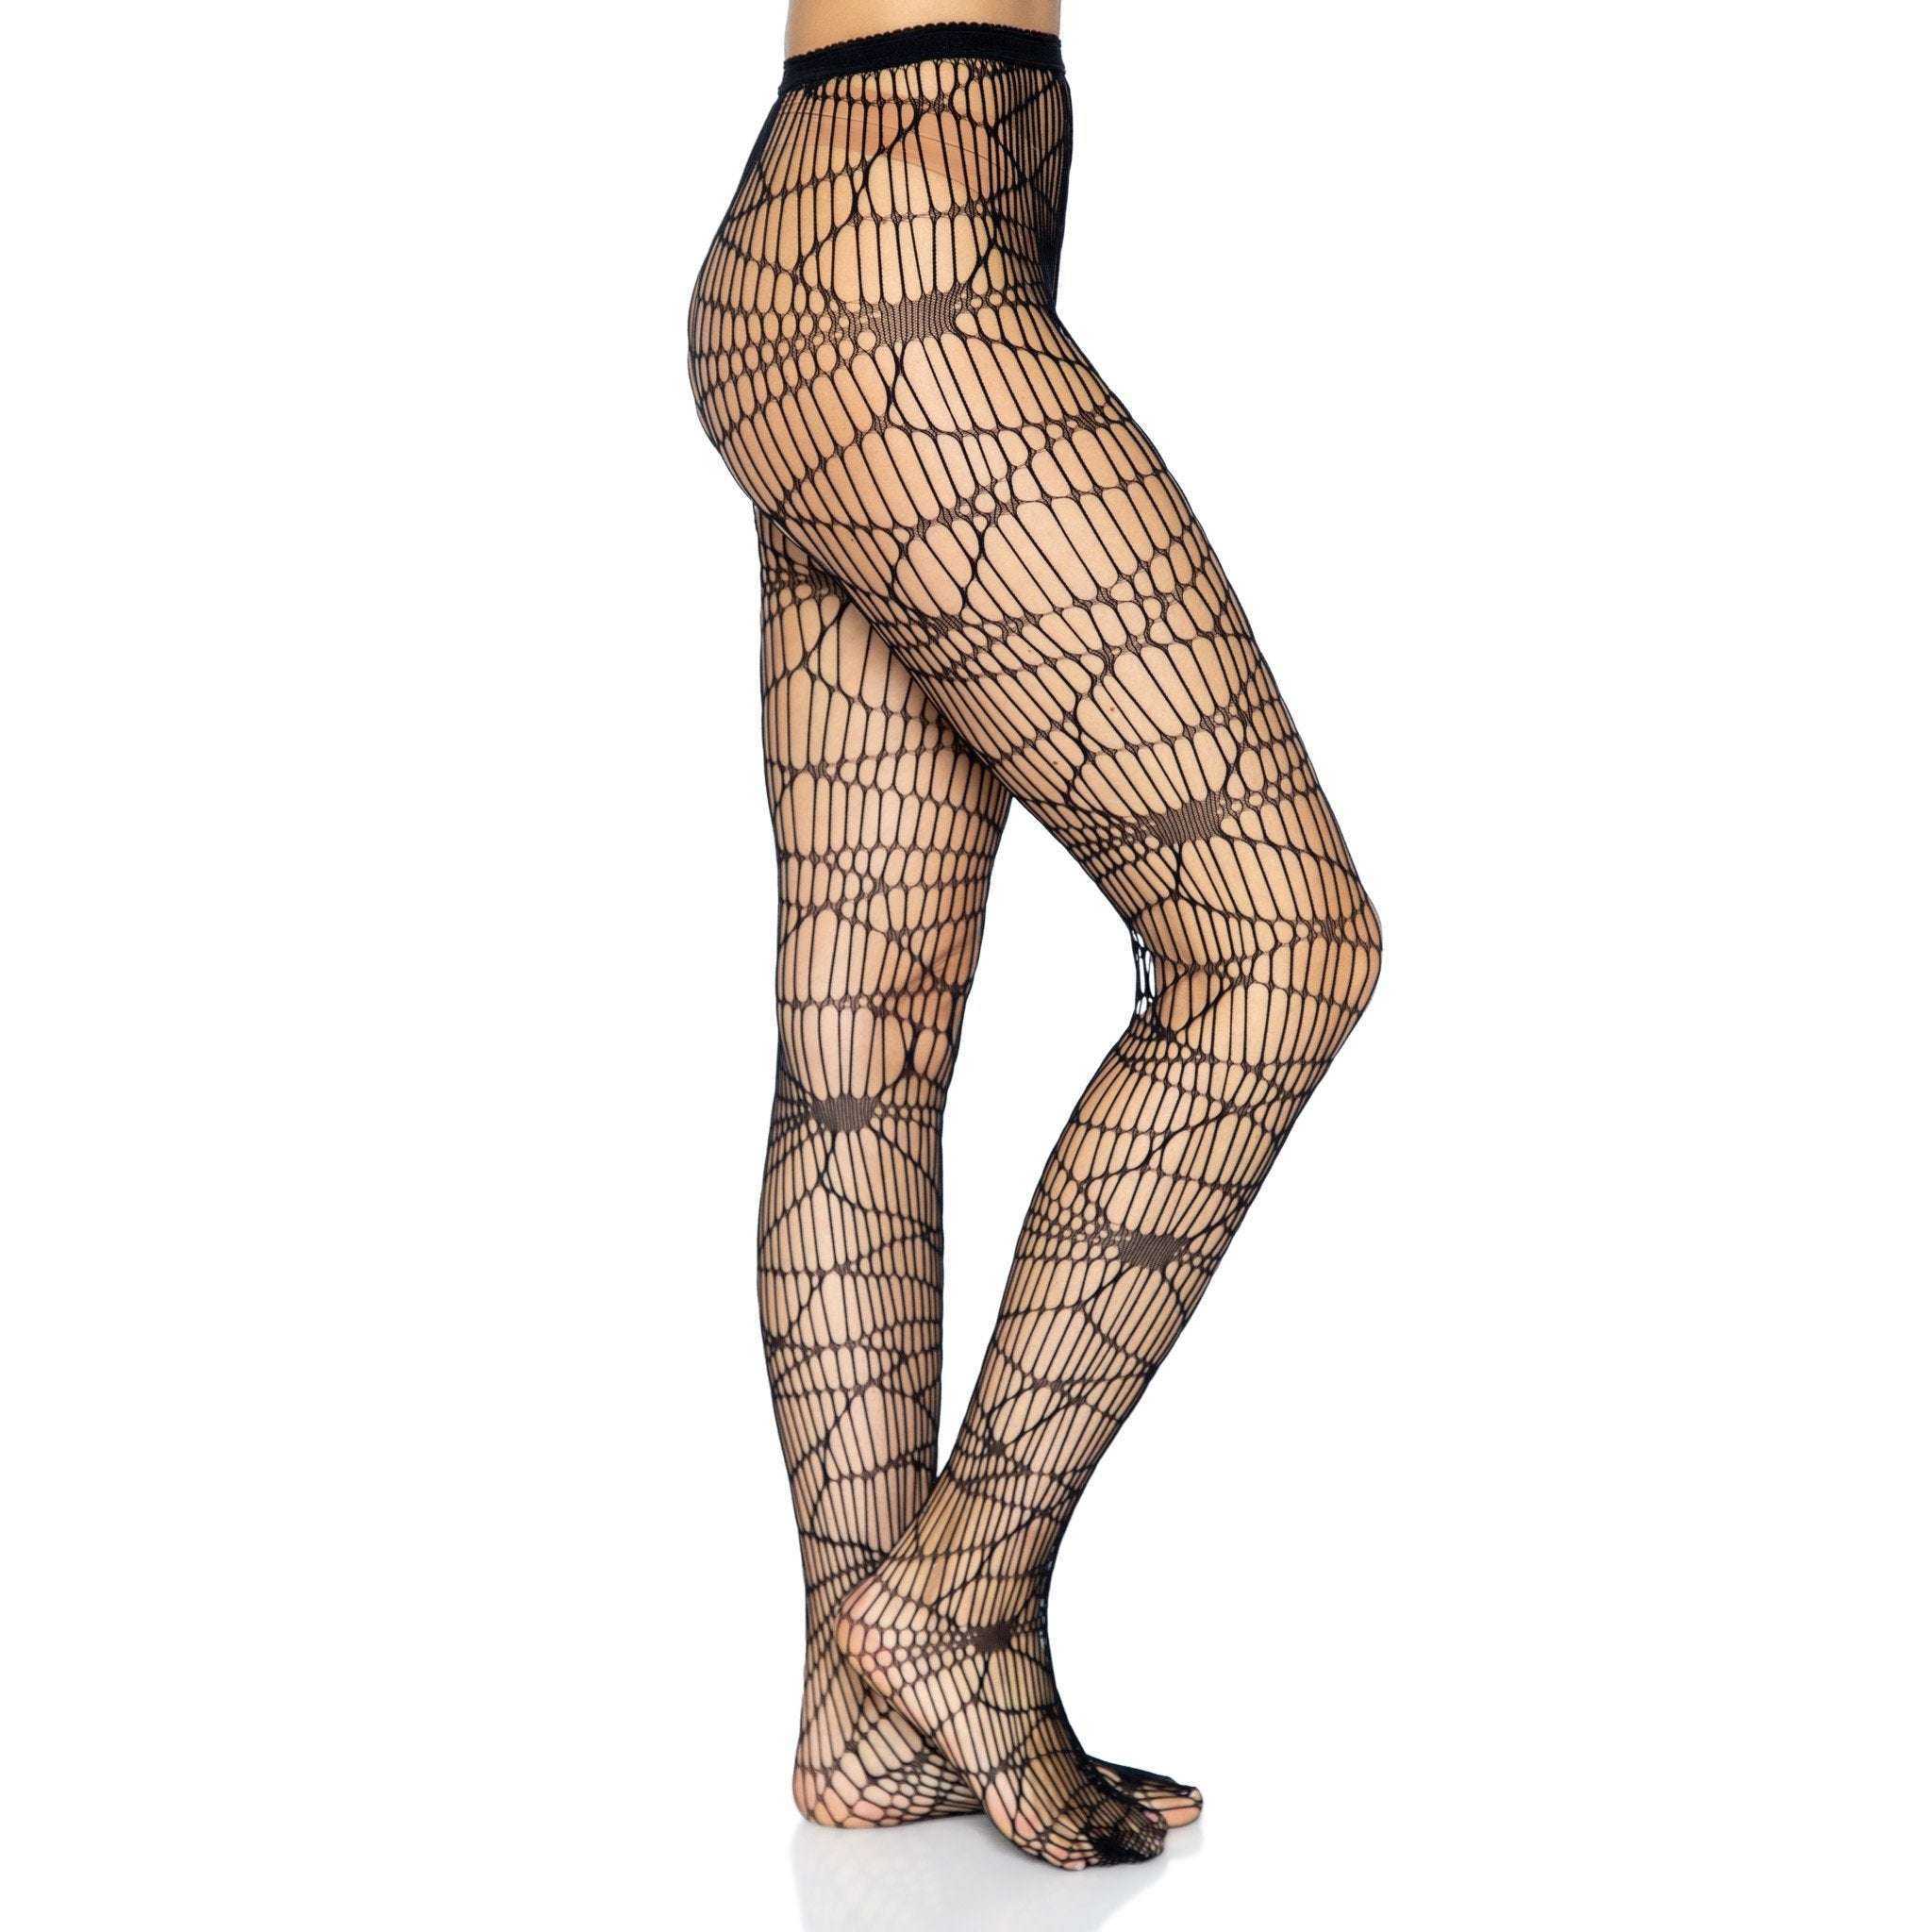 Buauty 3 pcs black fishnet stockings for women, fish nets women